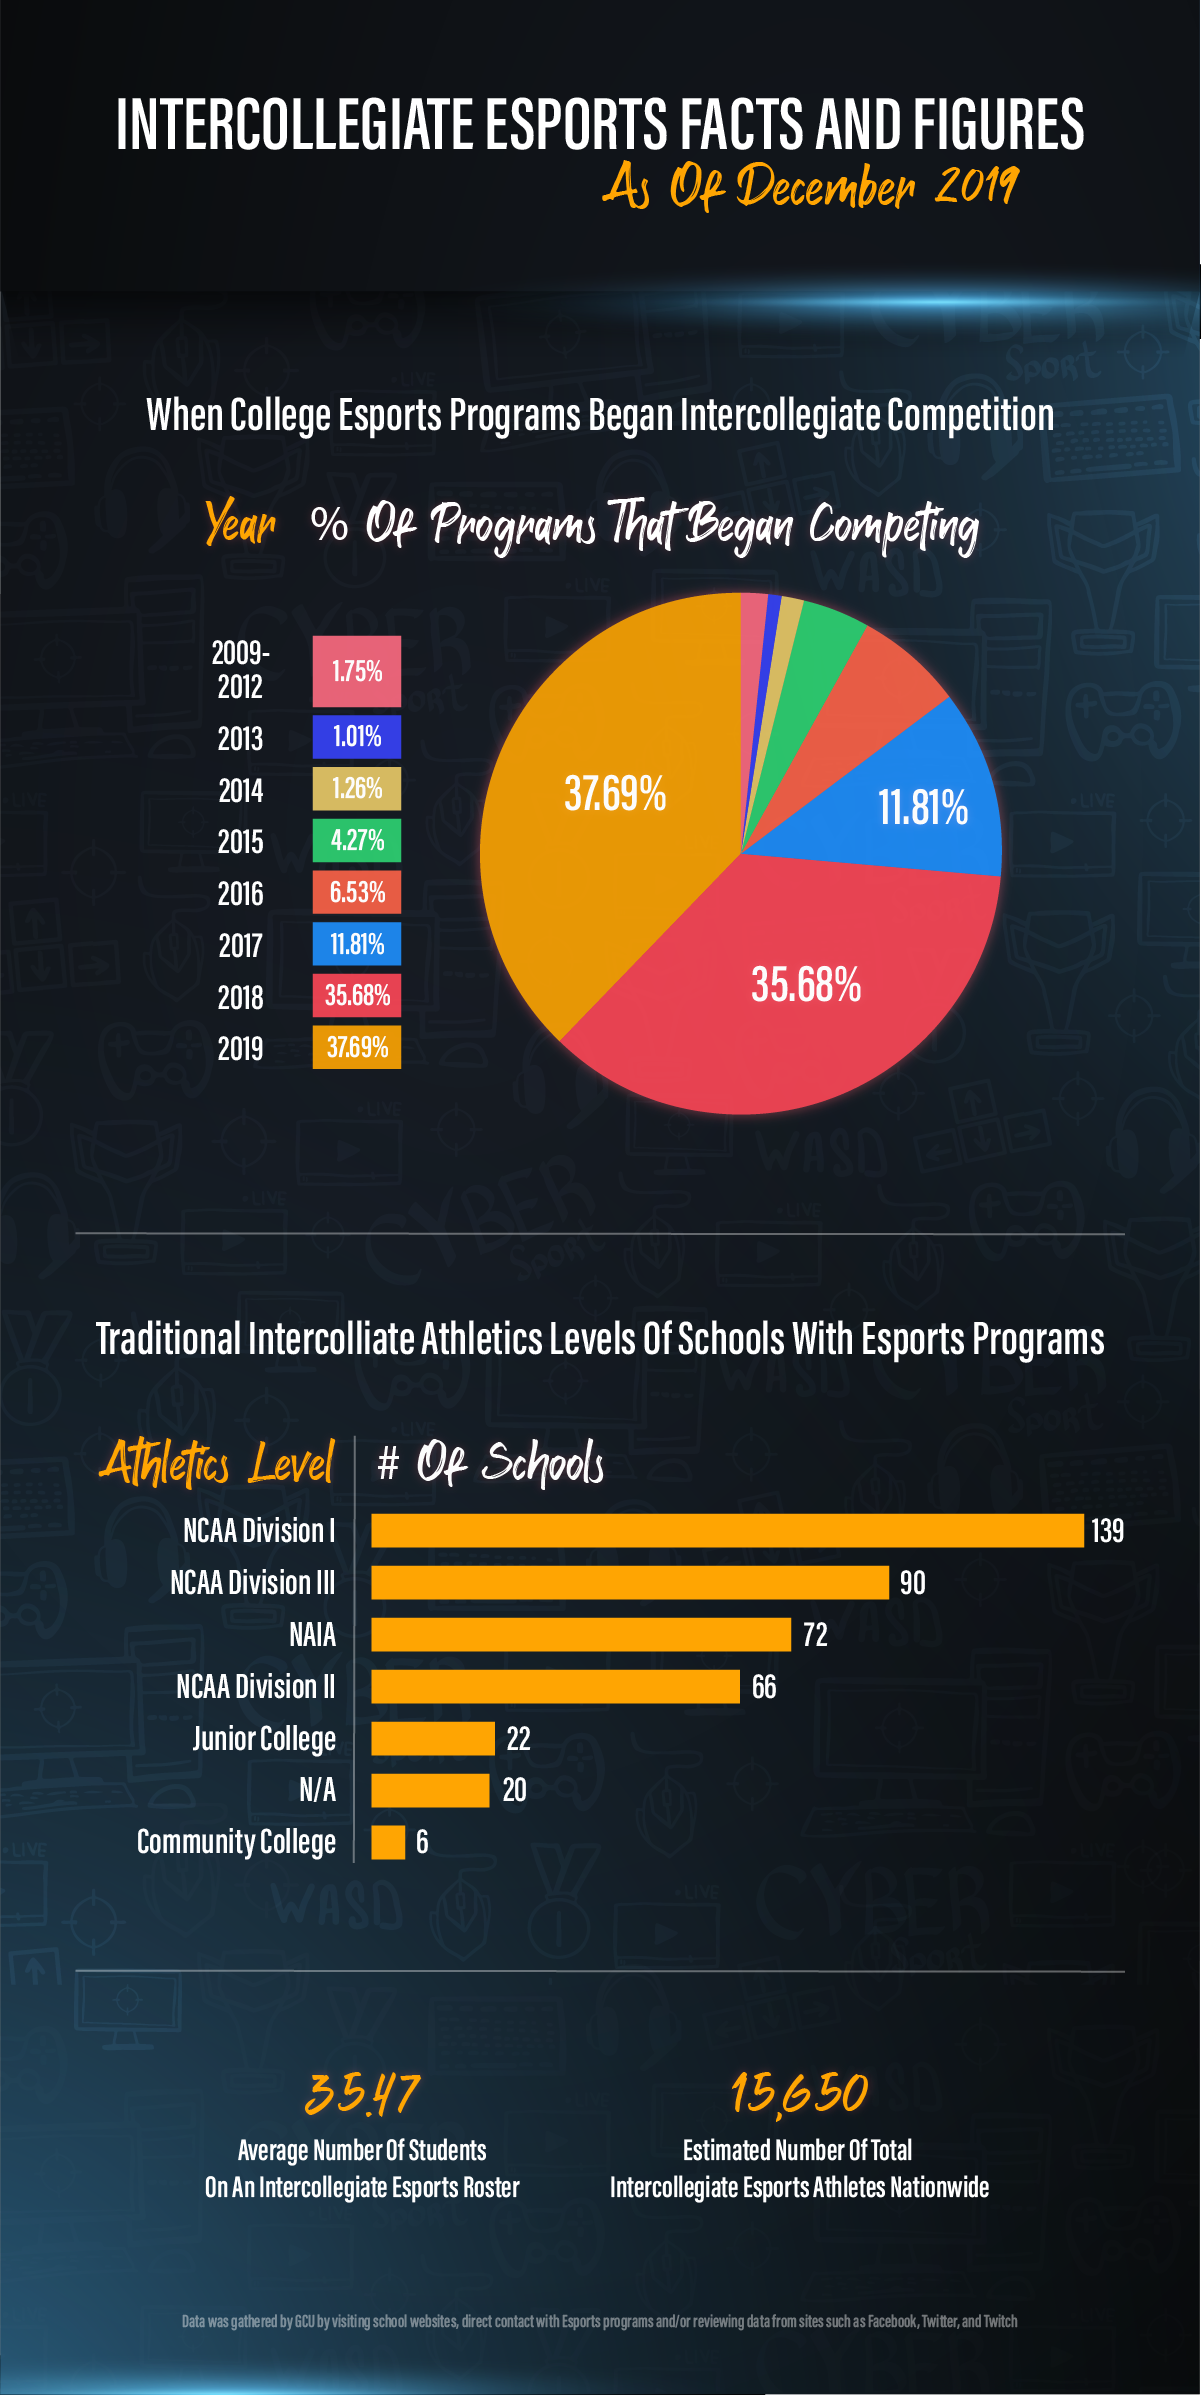 Intercollegiate Esports facts and figures